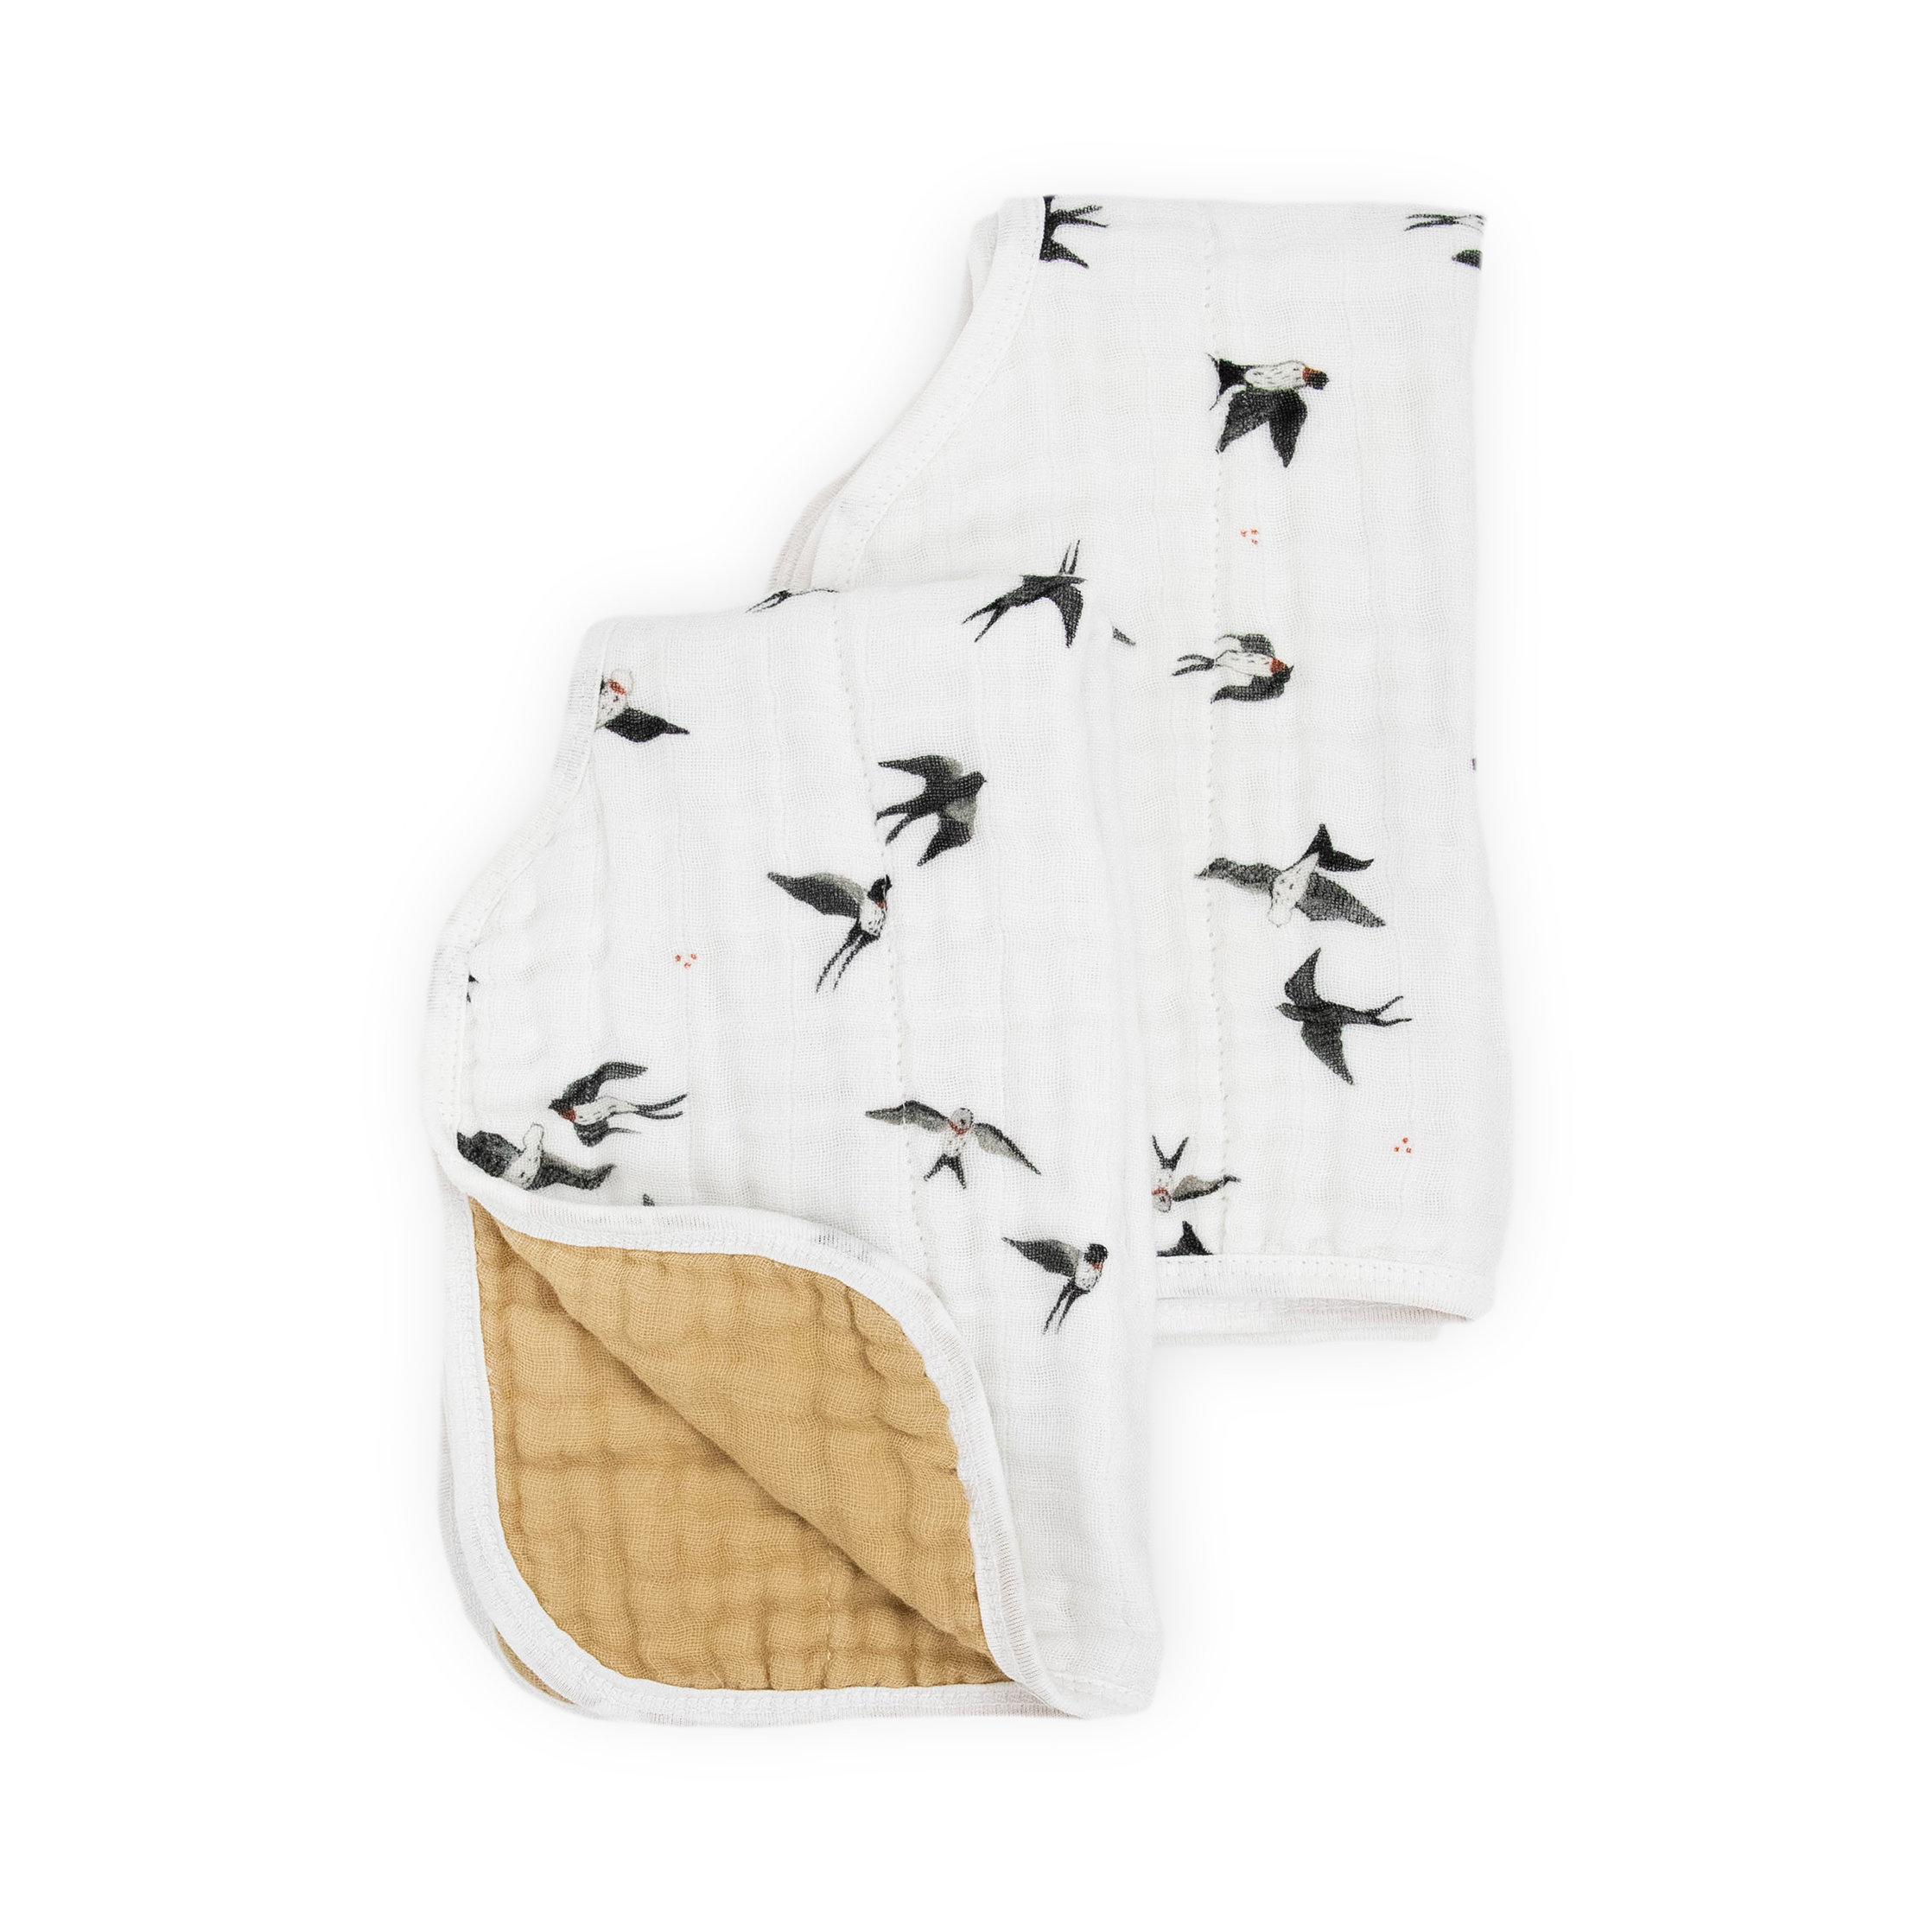 Organic Cotton Muslin Burp Cloth 2 Pack - Swallows + Wheat